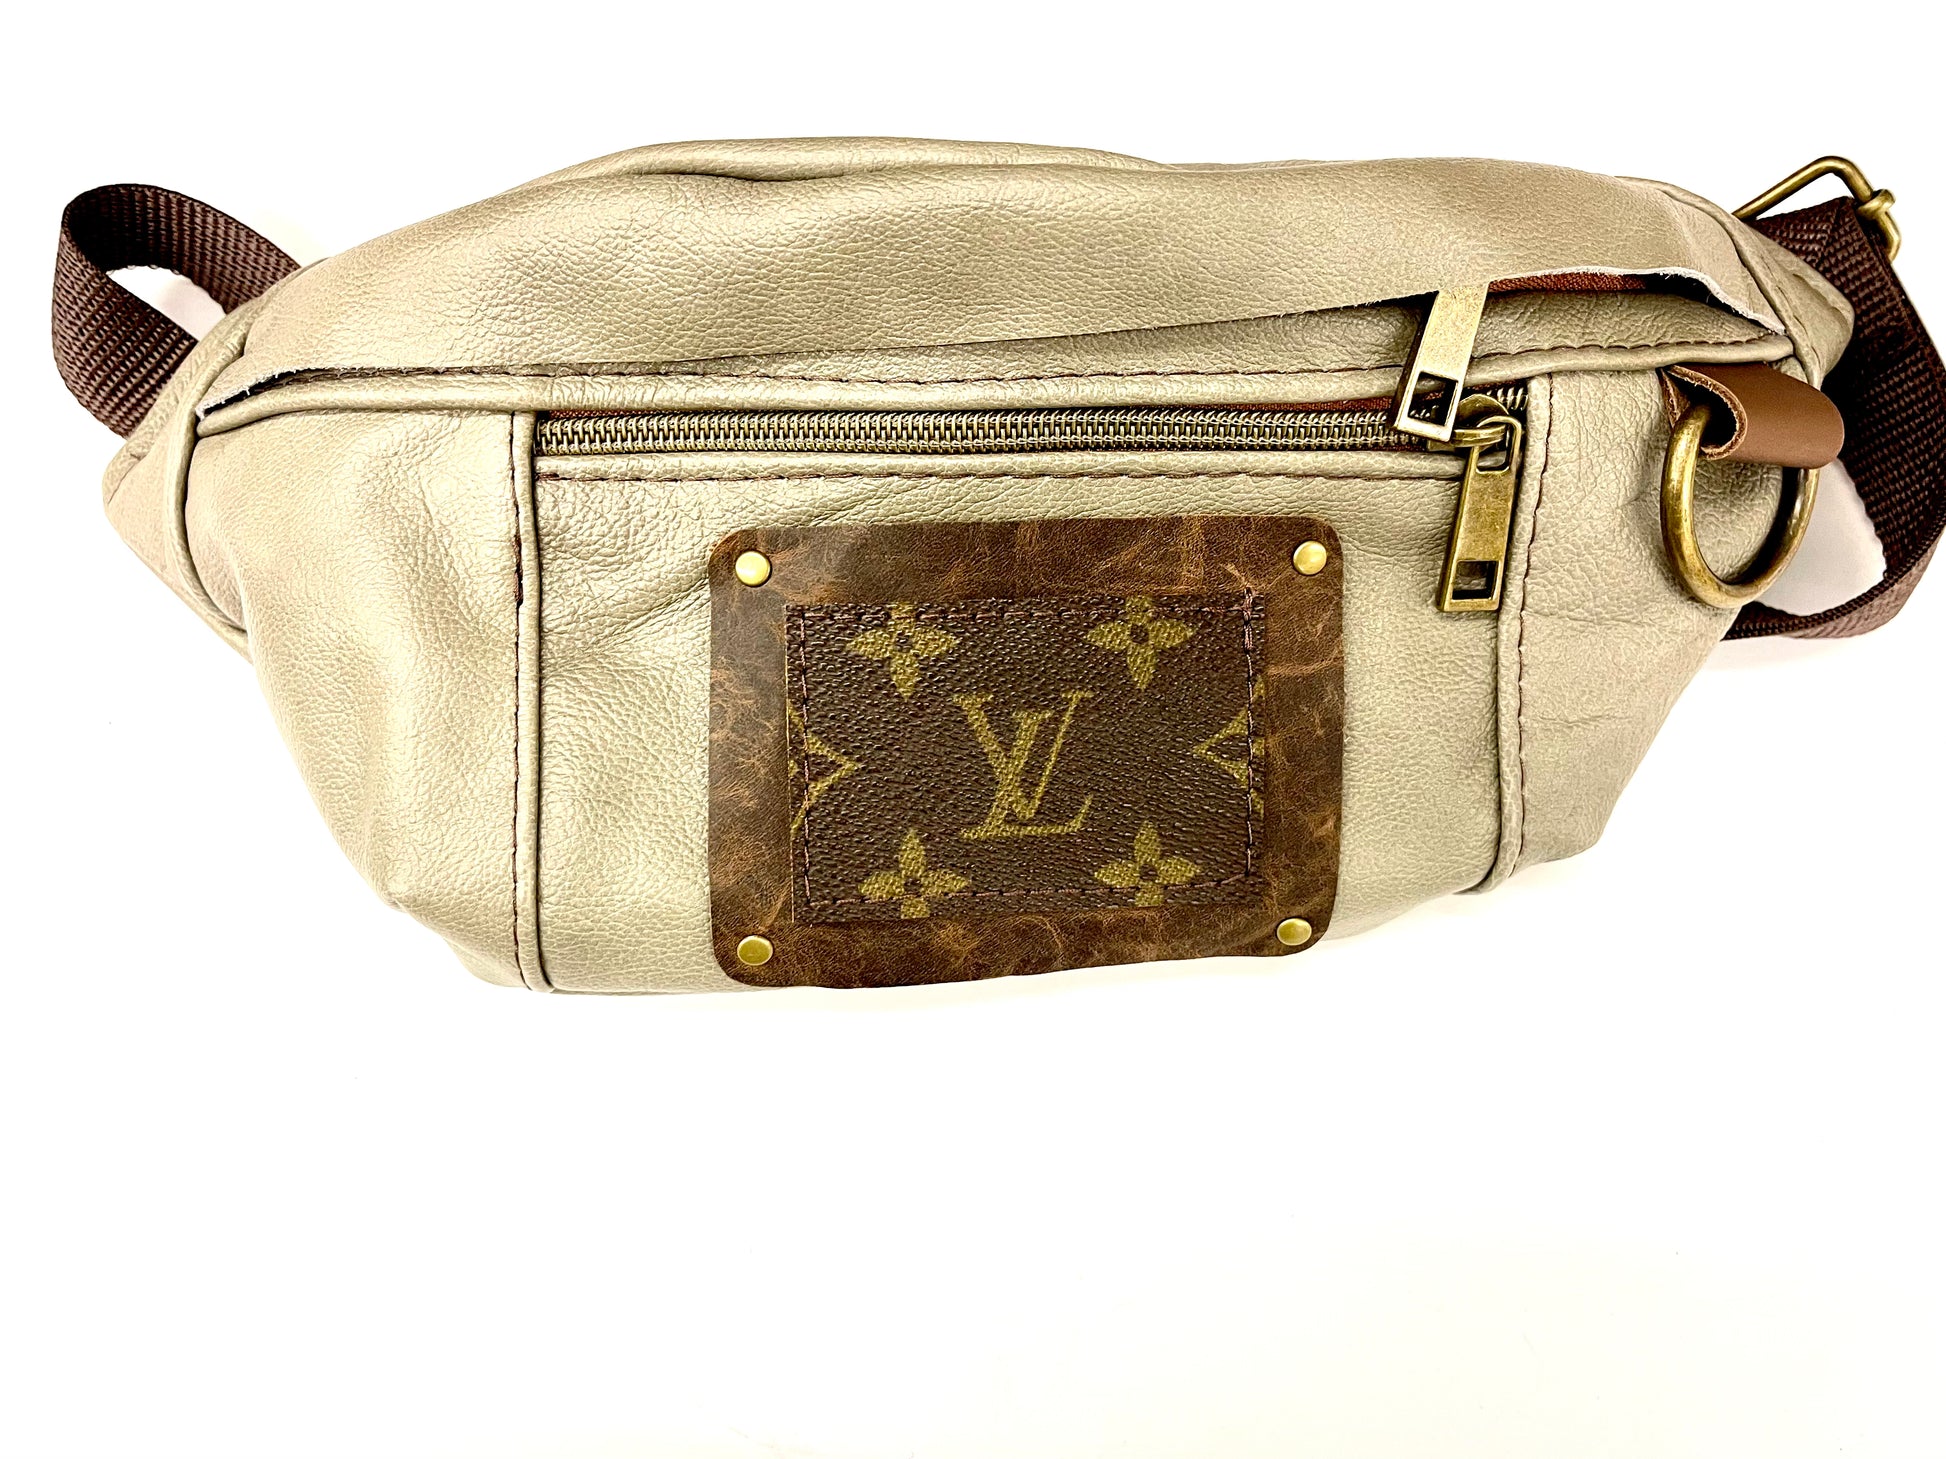 Louis Vuitton, Bags, Louis Vuitton Bum Bag Giant Monogram Khaki Green  Beige Fanny Pack